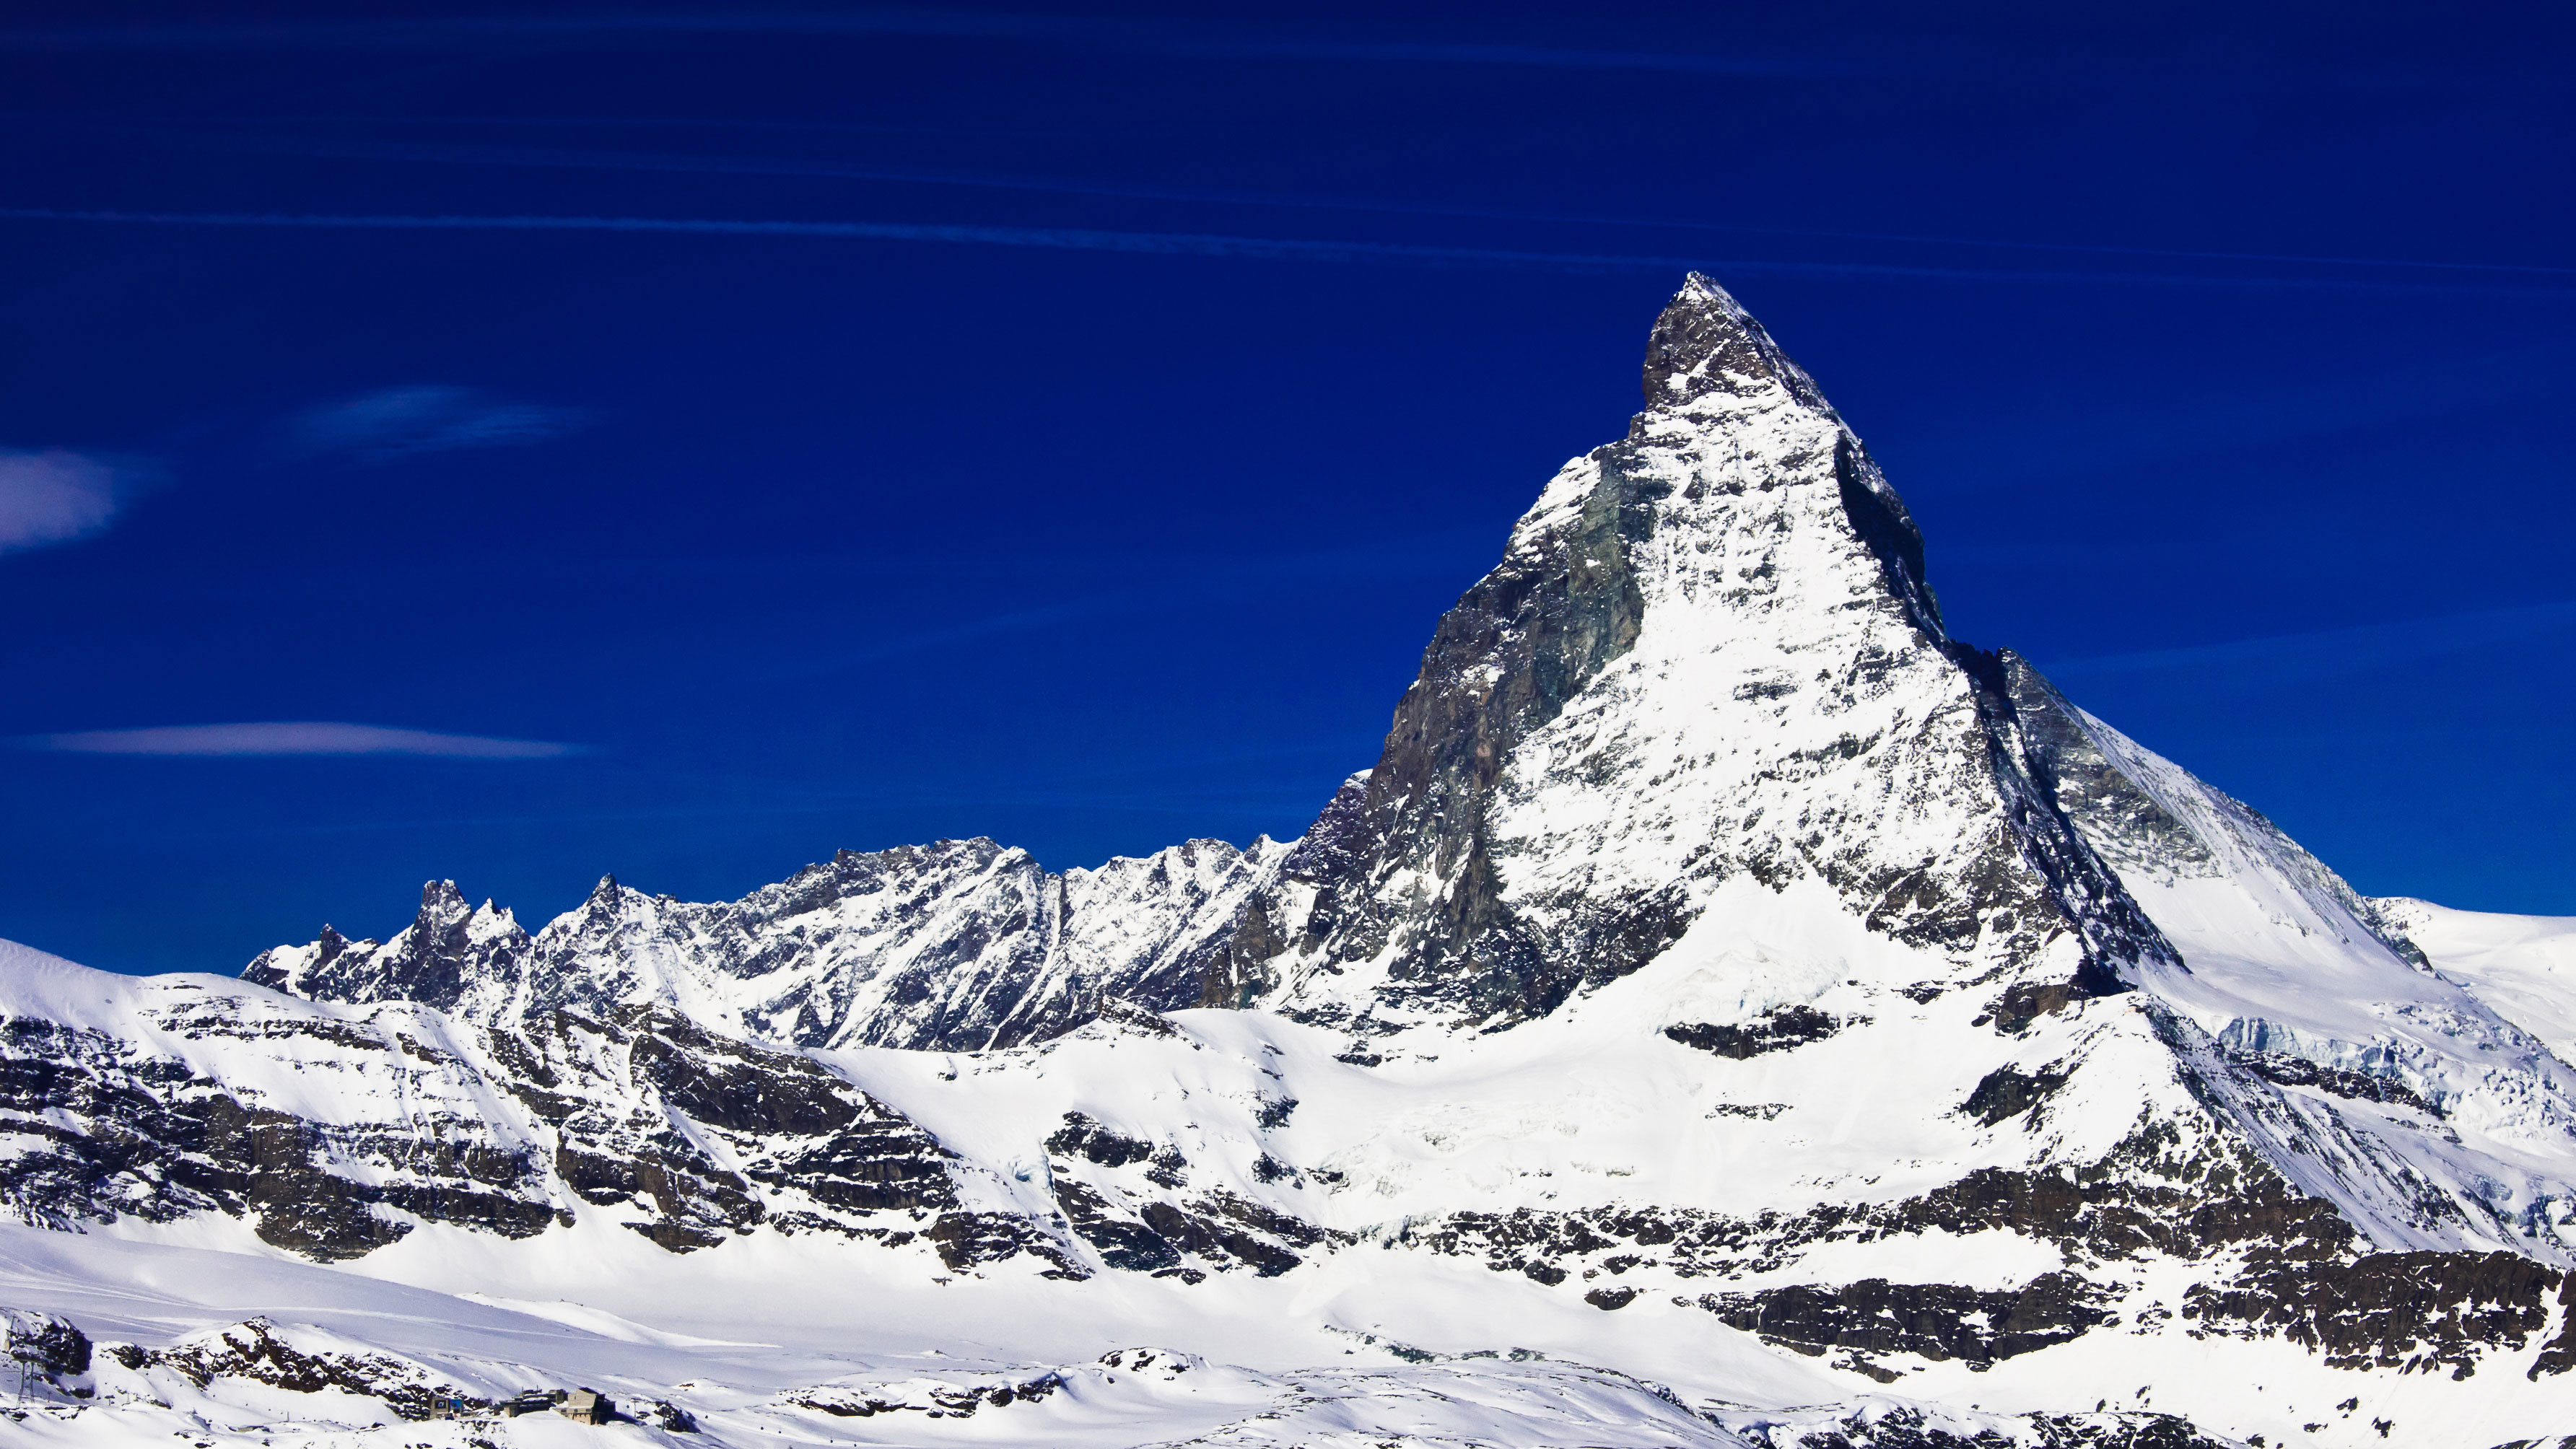 A landscape of the Matterhorn peak, logo of Toblerone chocolate, located at Gornergrat in Switzerland.